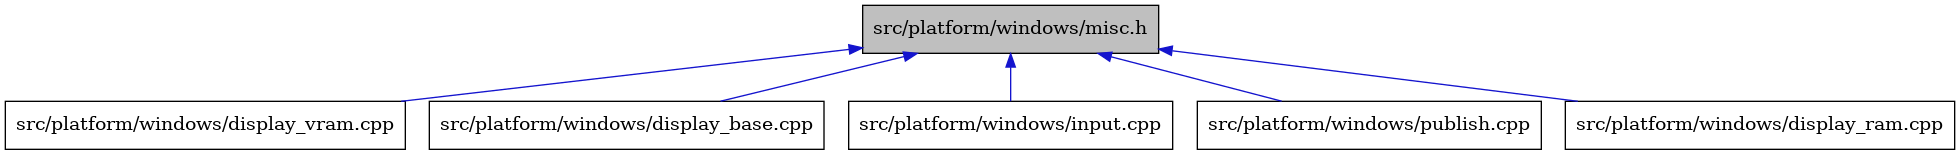 digraph {
    graph [bgcolor="#00000000"]
    node [shape=rectangle style=filled fillcolor="#FFFFFF" font=Helvetica padding=2]
    edge [color="#1414CE"]
    "5" [label="src/platform/windows/display_vram.cpp" tooltip="src/platform/windows/display_vram.cpp"]
    "3" [label="src/platform/windows/display_base.cpp" tooltip="src/platform/windows/display_base.cpp"]
    "1" [label="src/platform/windows/misc.h" tooltip="src/platform/windows/misc.h" fillcolor="#BFBFBF"]
    "4" [label="src/platform/windows/input.cpp" tooltip="src/platform/windows/input.cpp"]
    "6" [label="src/platform/windows/publish.cpp" tooltip="src/platform/windows/publish.cpp"]
    "2" [label="src/platform/windows/display_ram.cpp" tooltip="src/platform/windows/display_ram.cpp"]
    "1" -> "2" [dir=back tooltip="include"]
    "1" -> "3" [dir=back tooltip="include"]
    "1" -> "4" [dir=back tooltip="include"]
    "1" -> "5" [dir=back tooltip="include"]
    "1" -> "6" [dir=back tooltip="include"]
}